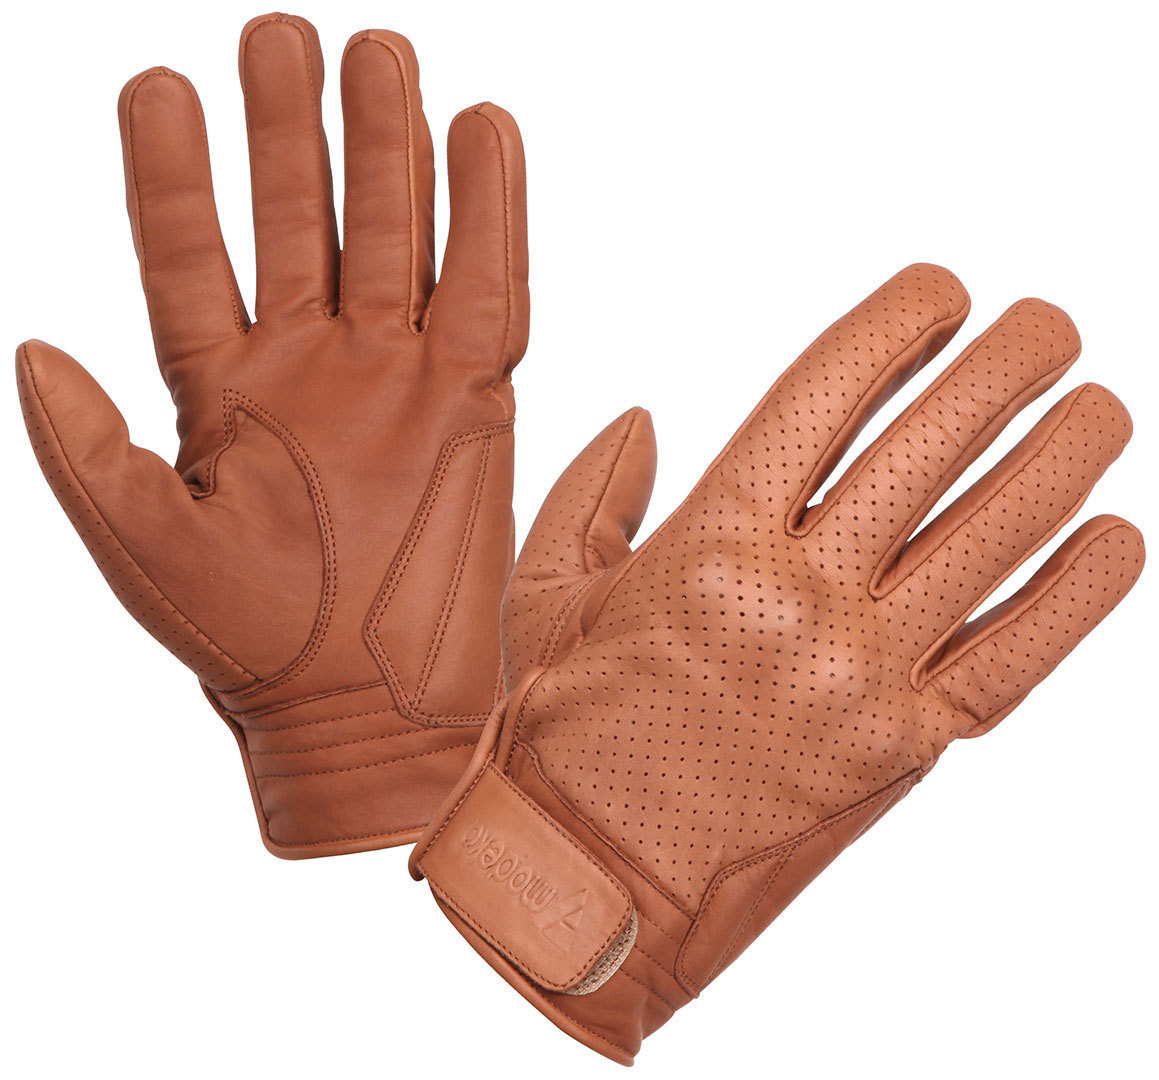 Modeka Hot Classic Handschuhe, braun, Größe M L, braun, Größe M L